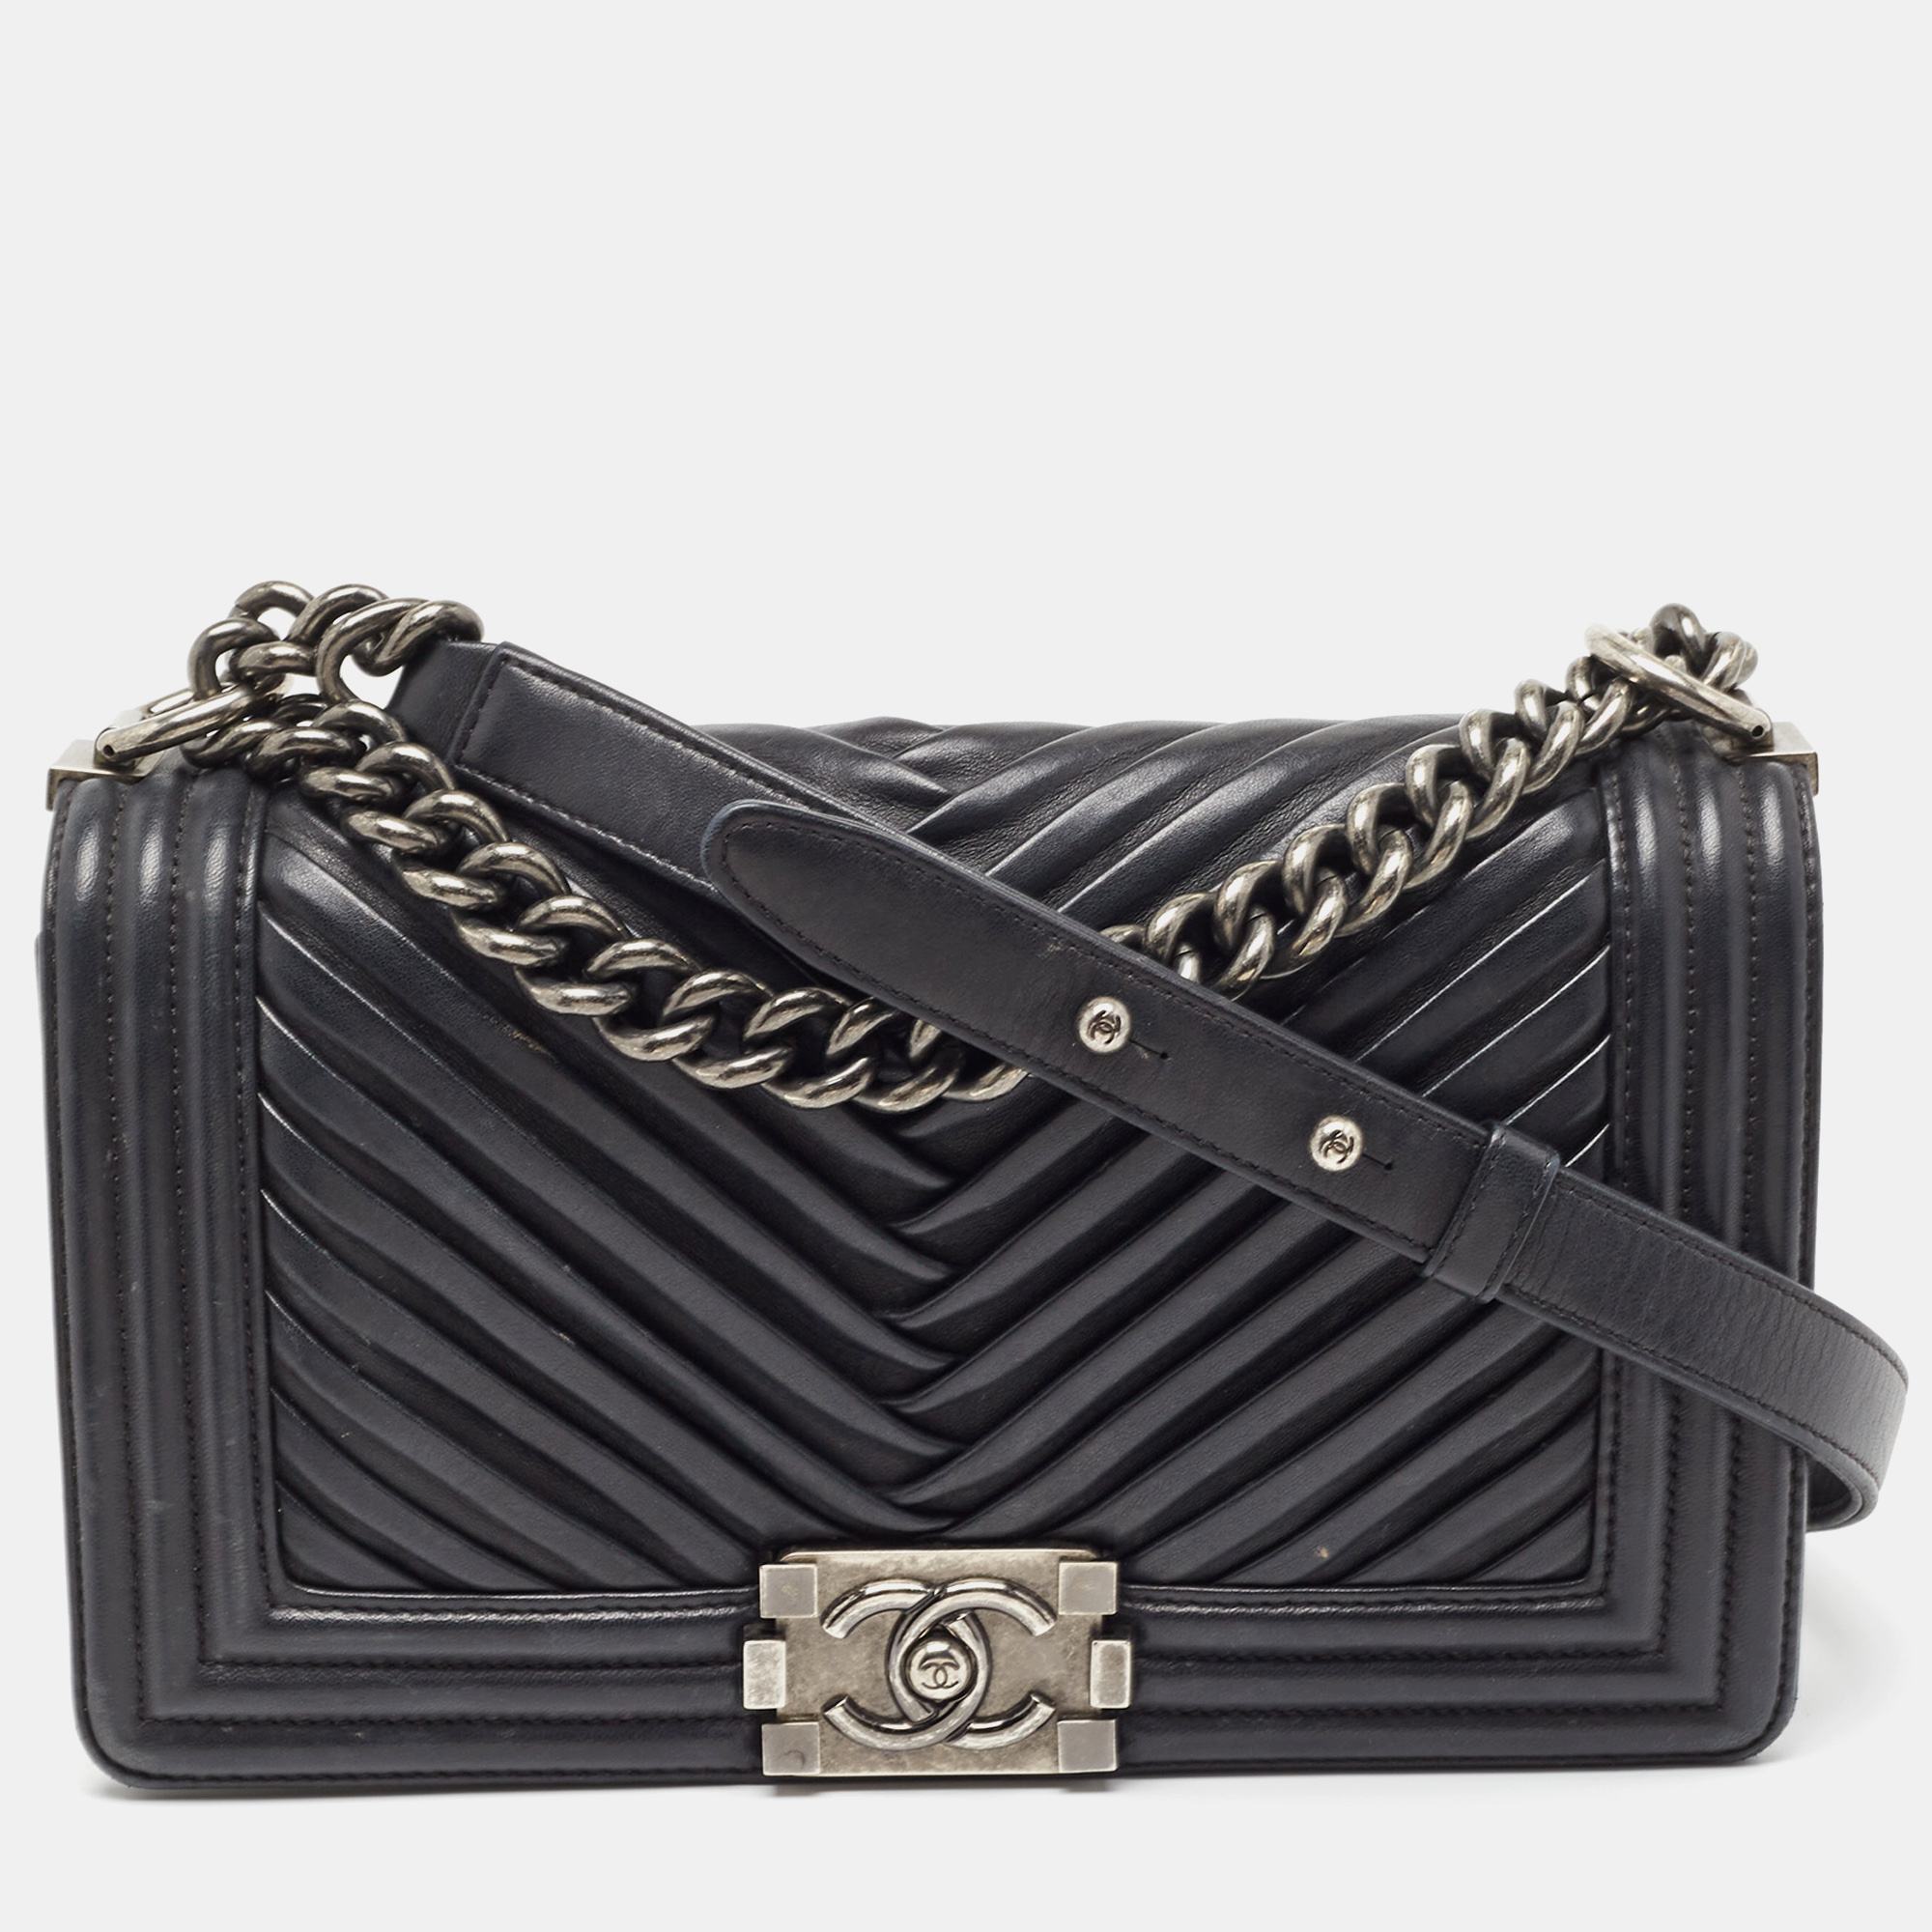 Chanel black chevron pleated leather medium boy flap bag